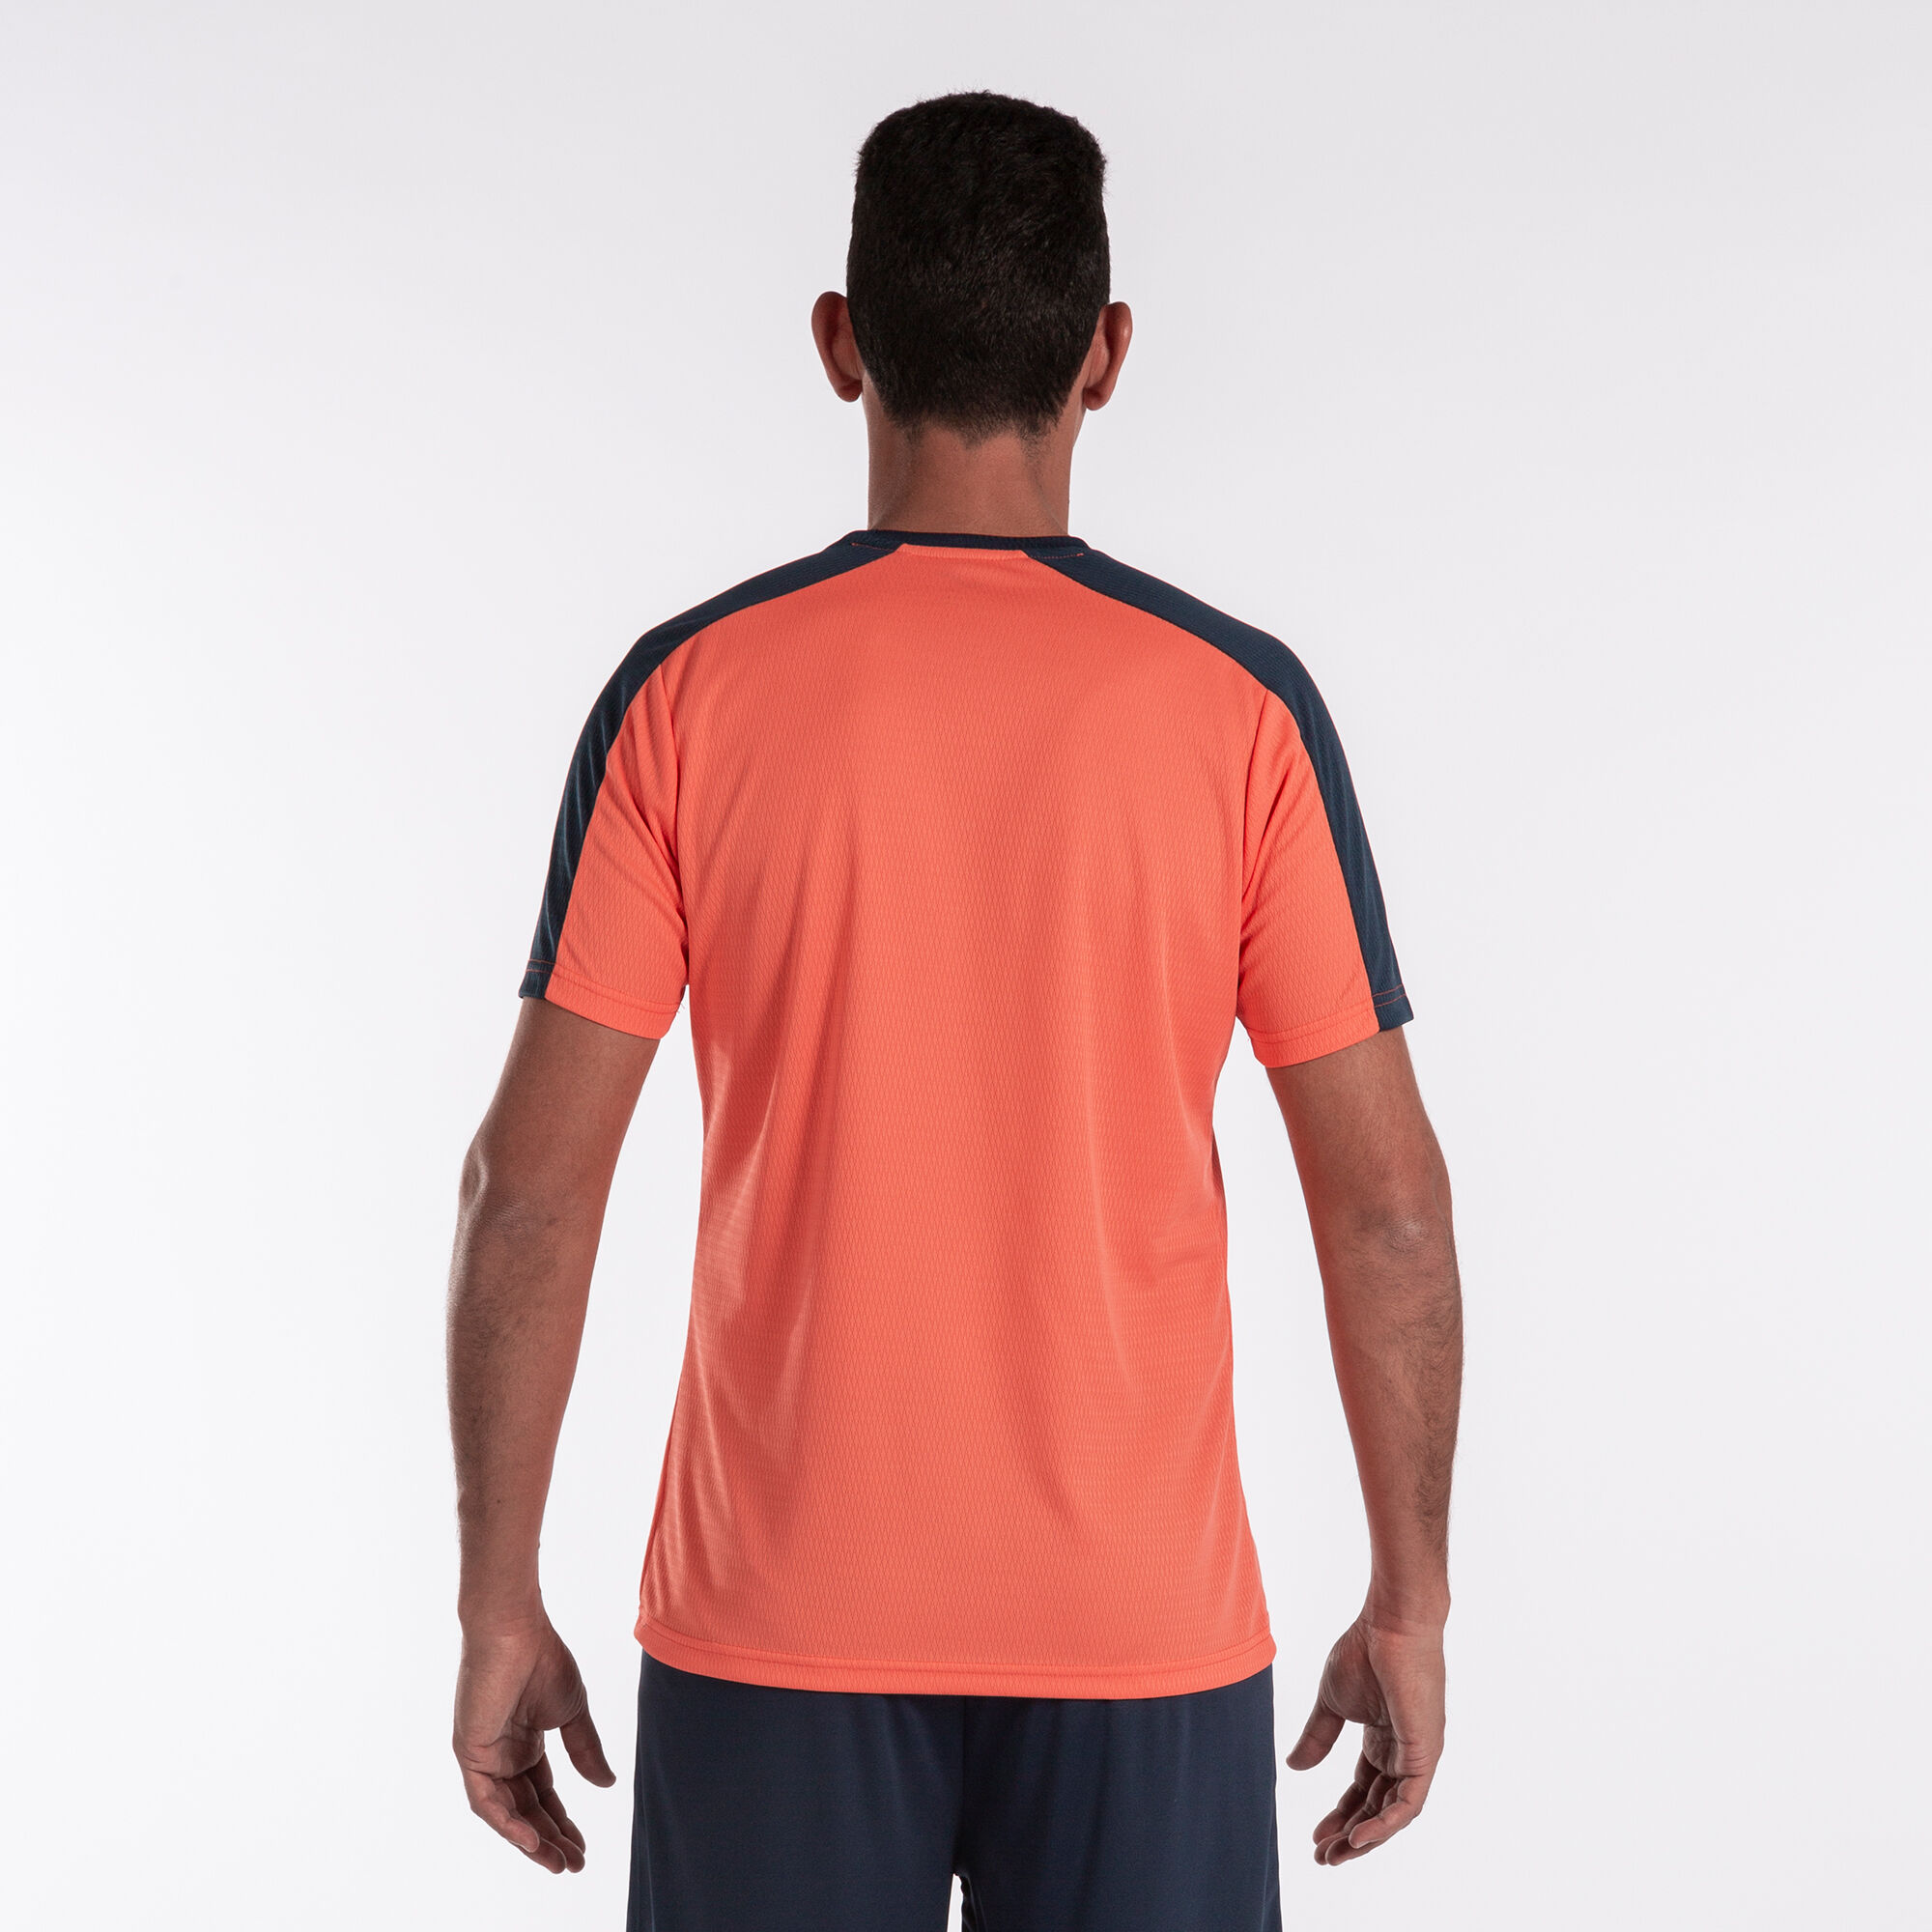 T-shirt manga curta homem Eco Championship laranja fluorescente azul marinho